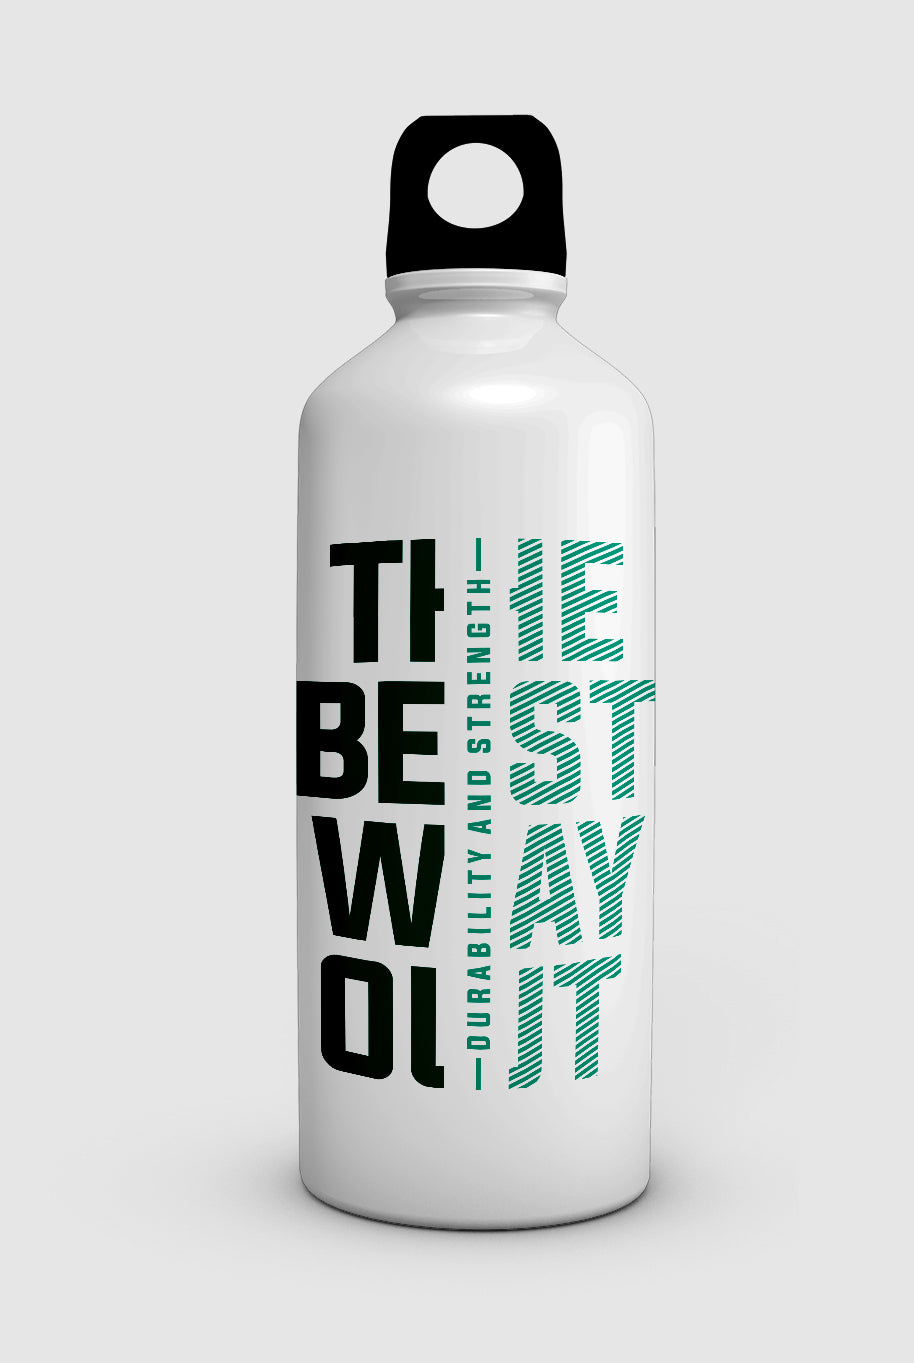 "BEST WAY OUT" water bottle